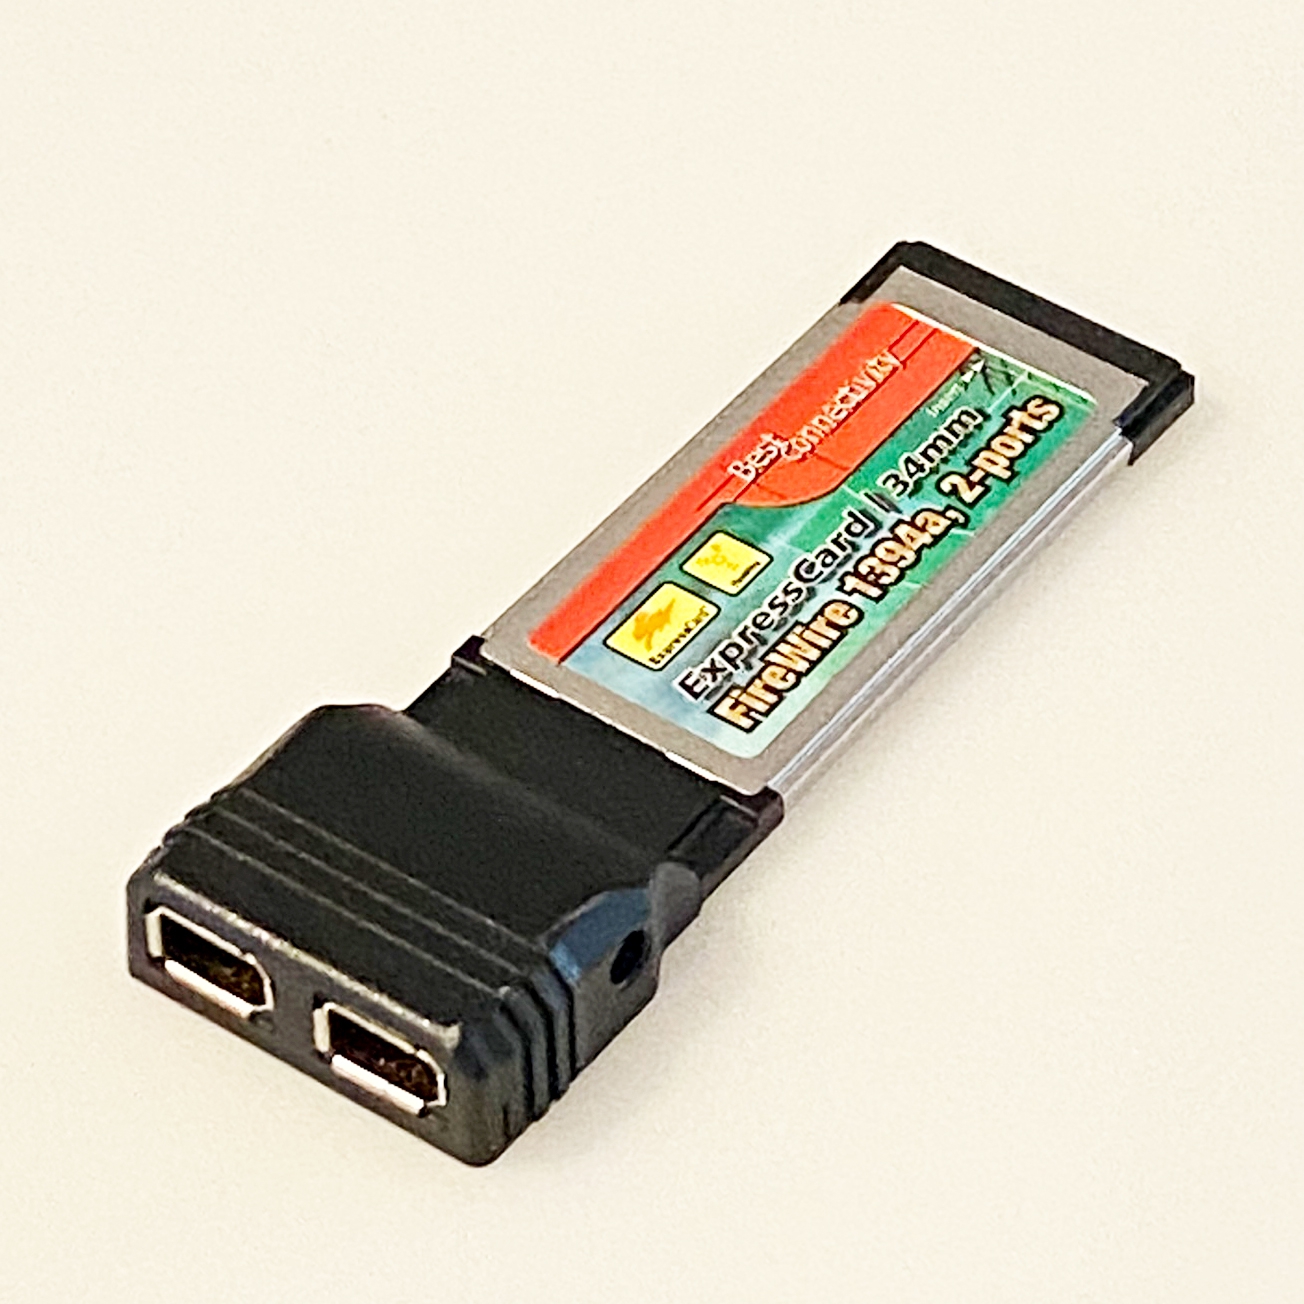 ExpressCard FireWire 400 avec Texas Instruments chip XIO2200 34mm